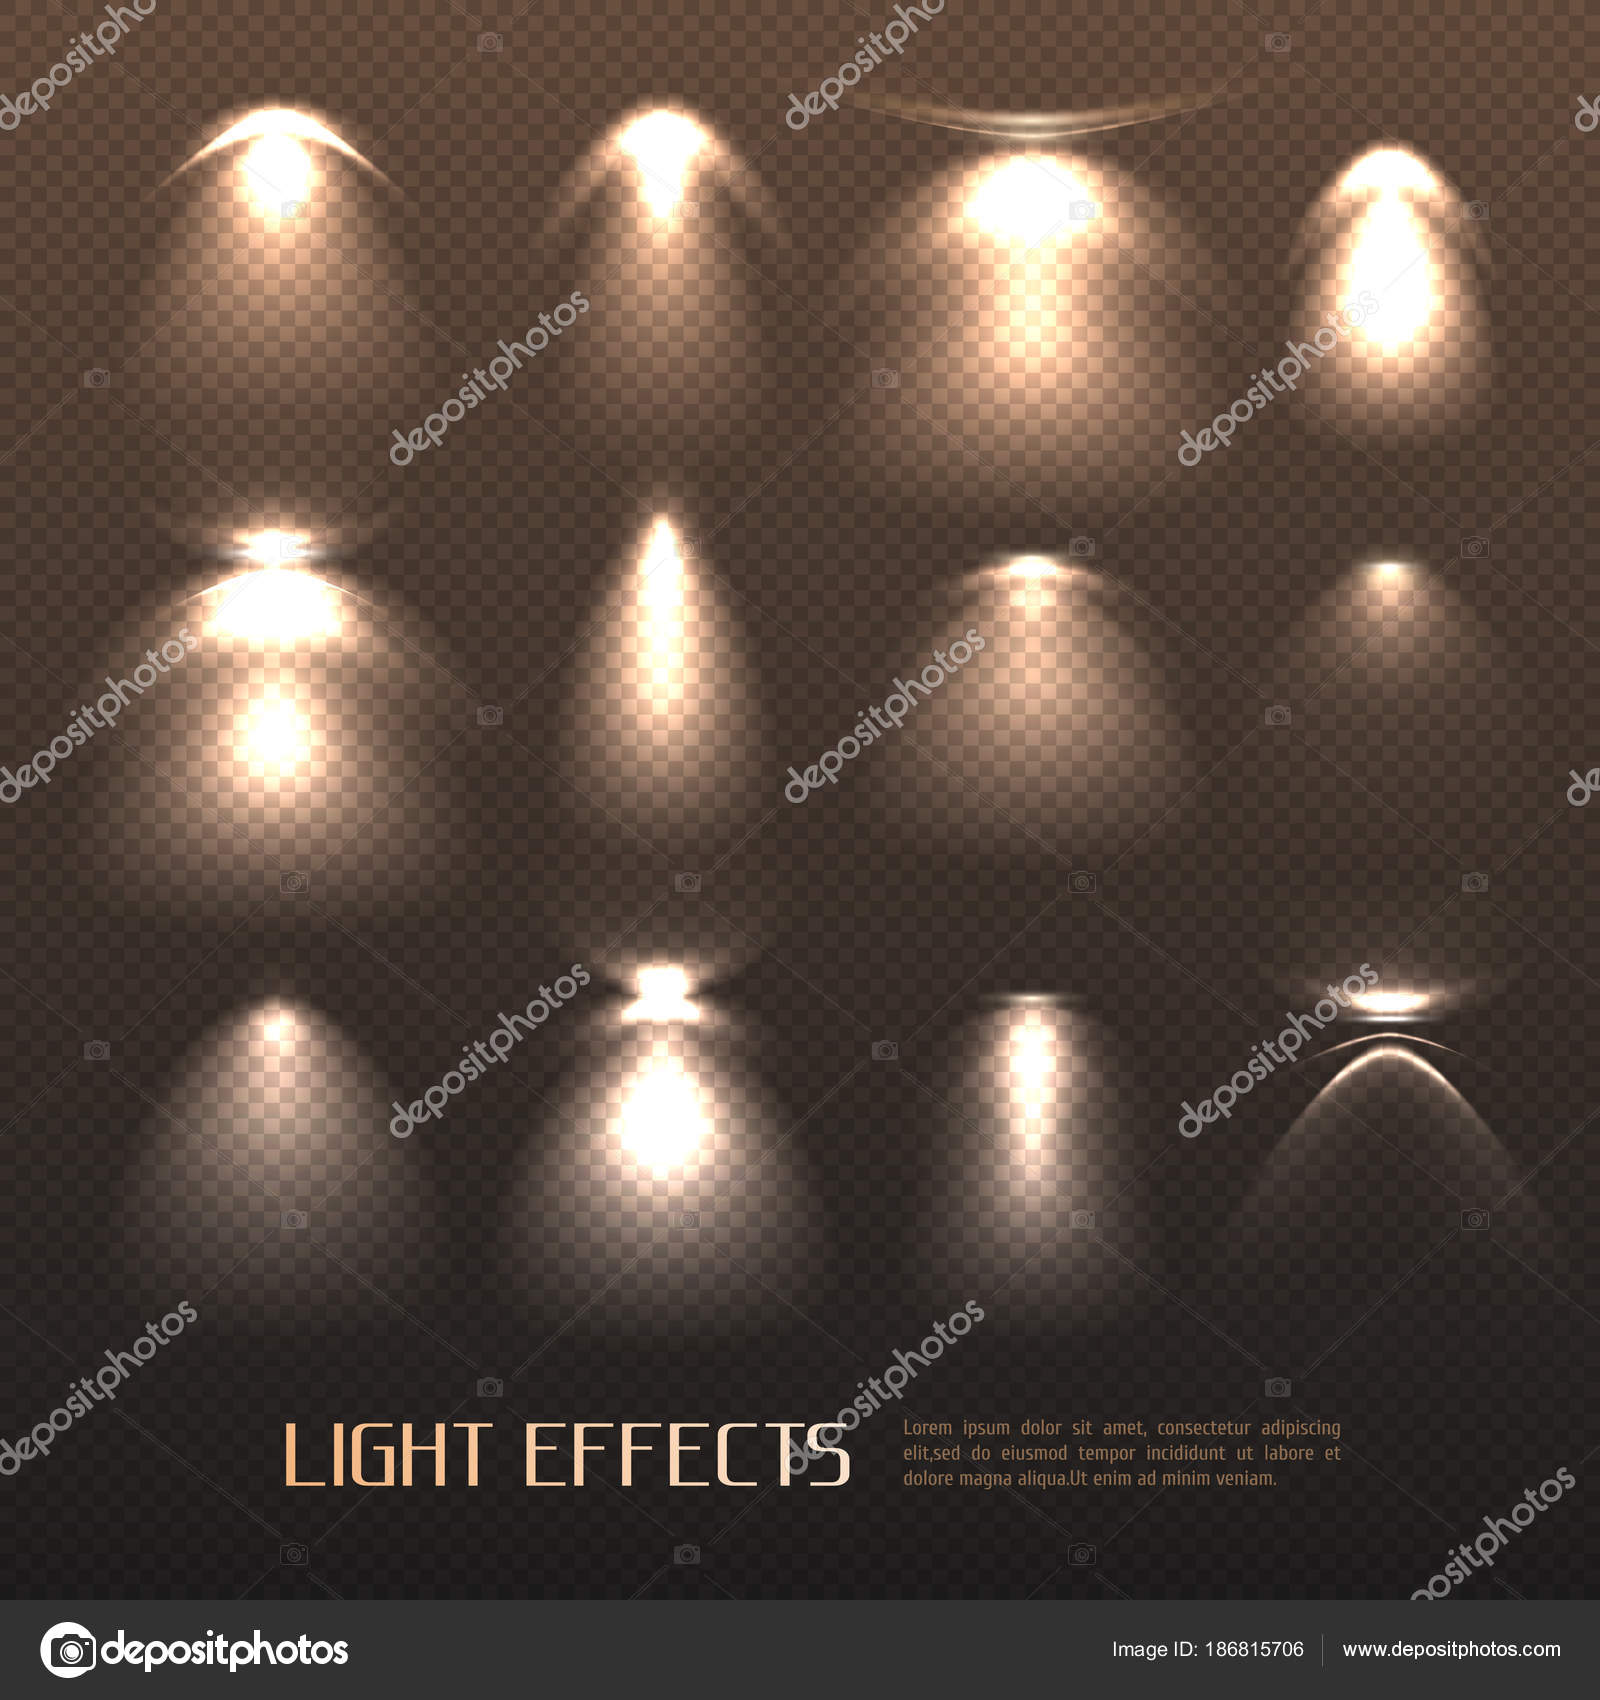 Light effects photo